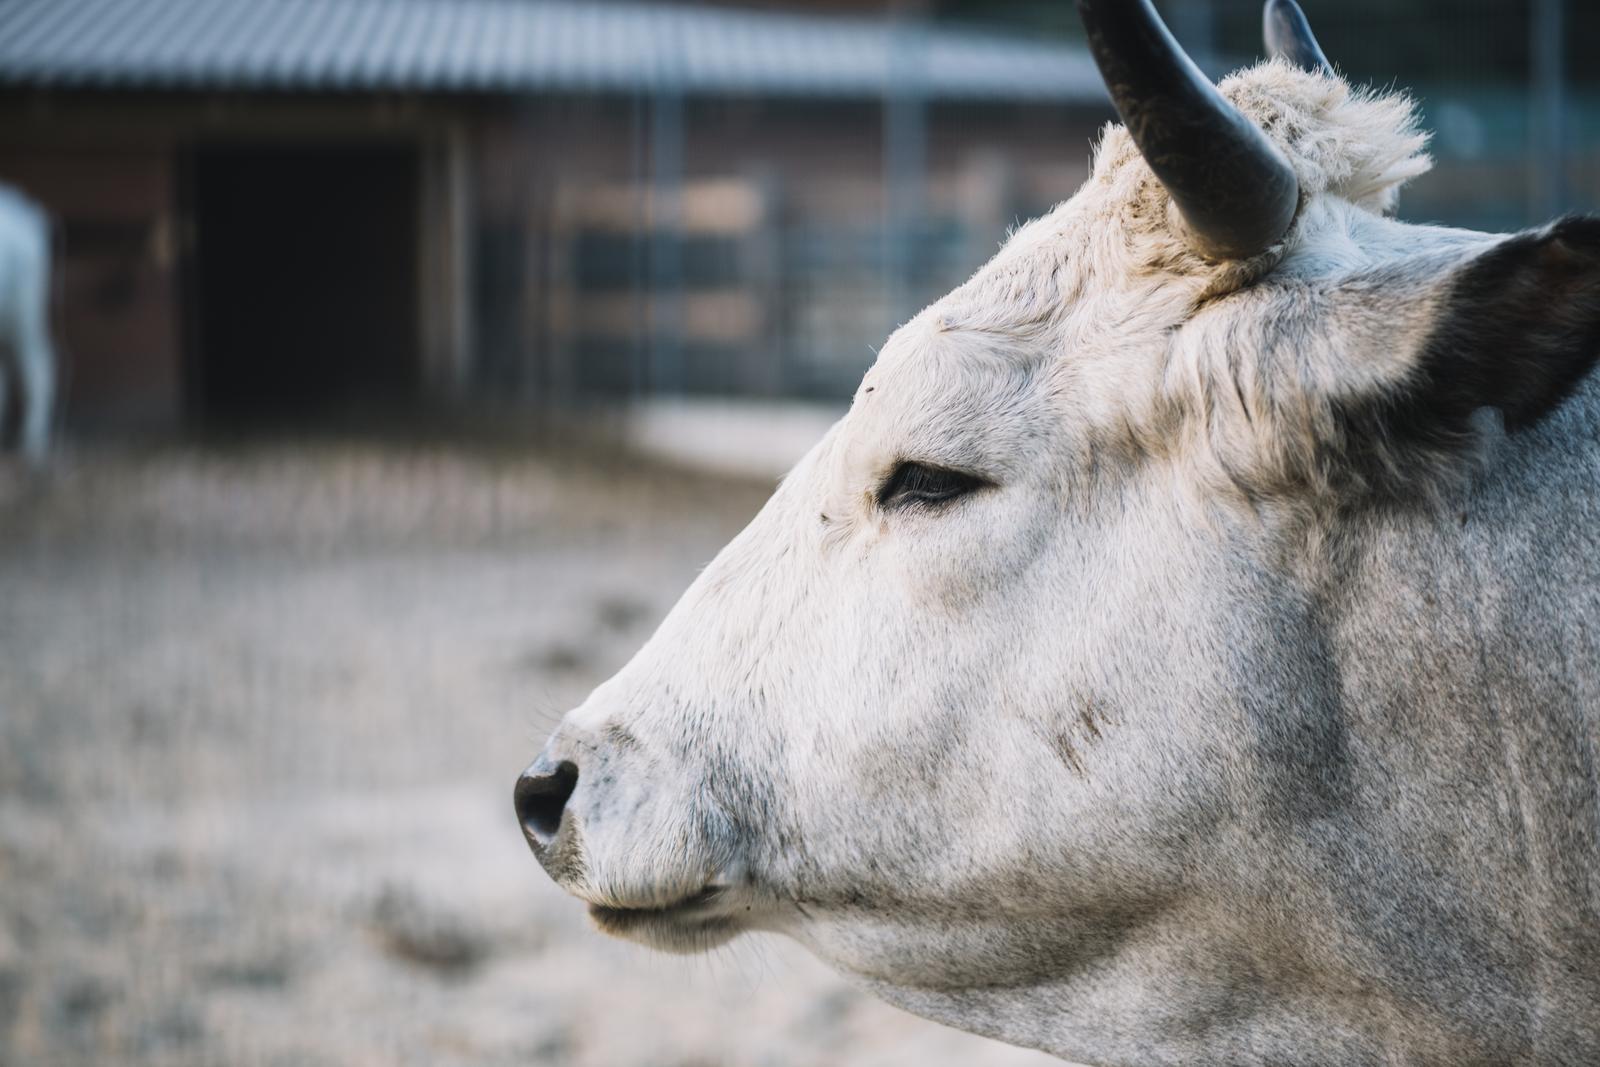 Raising of other cattle and buffaloes in Lääne-Viru county